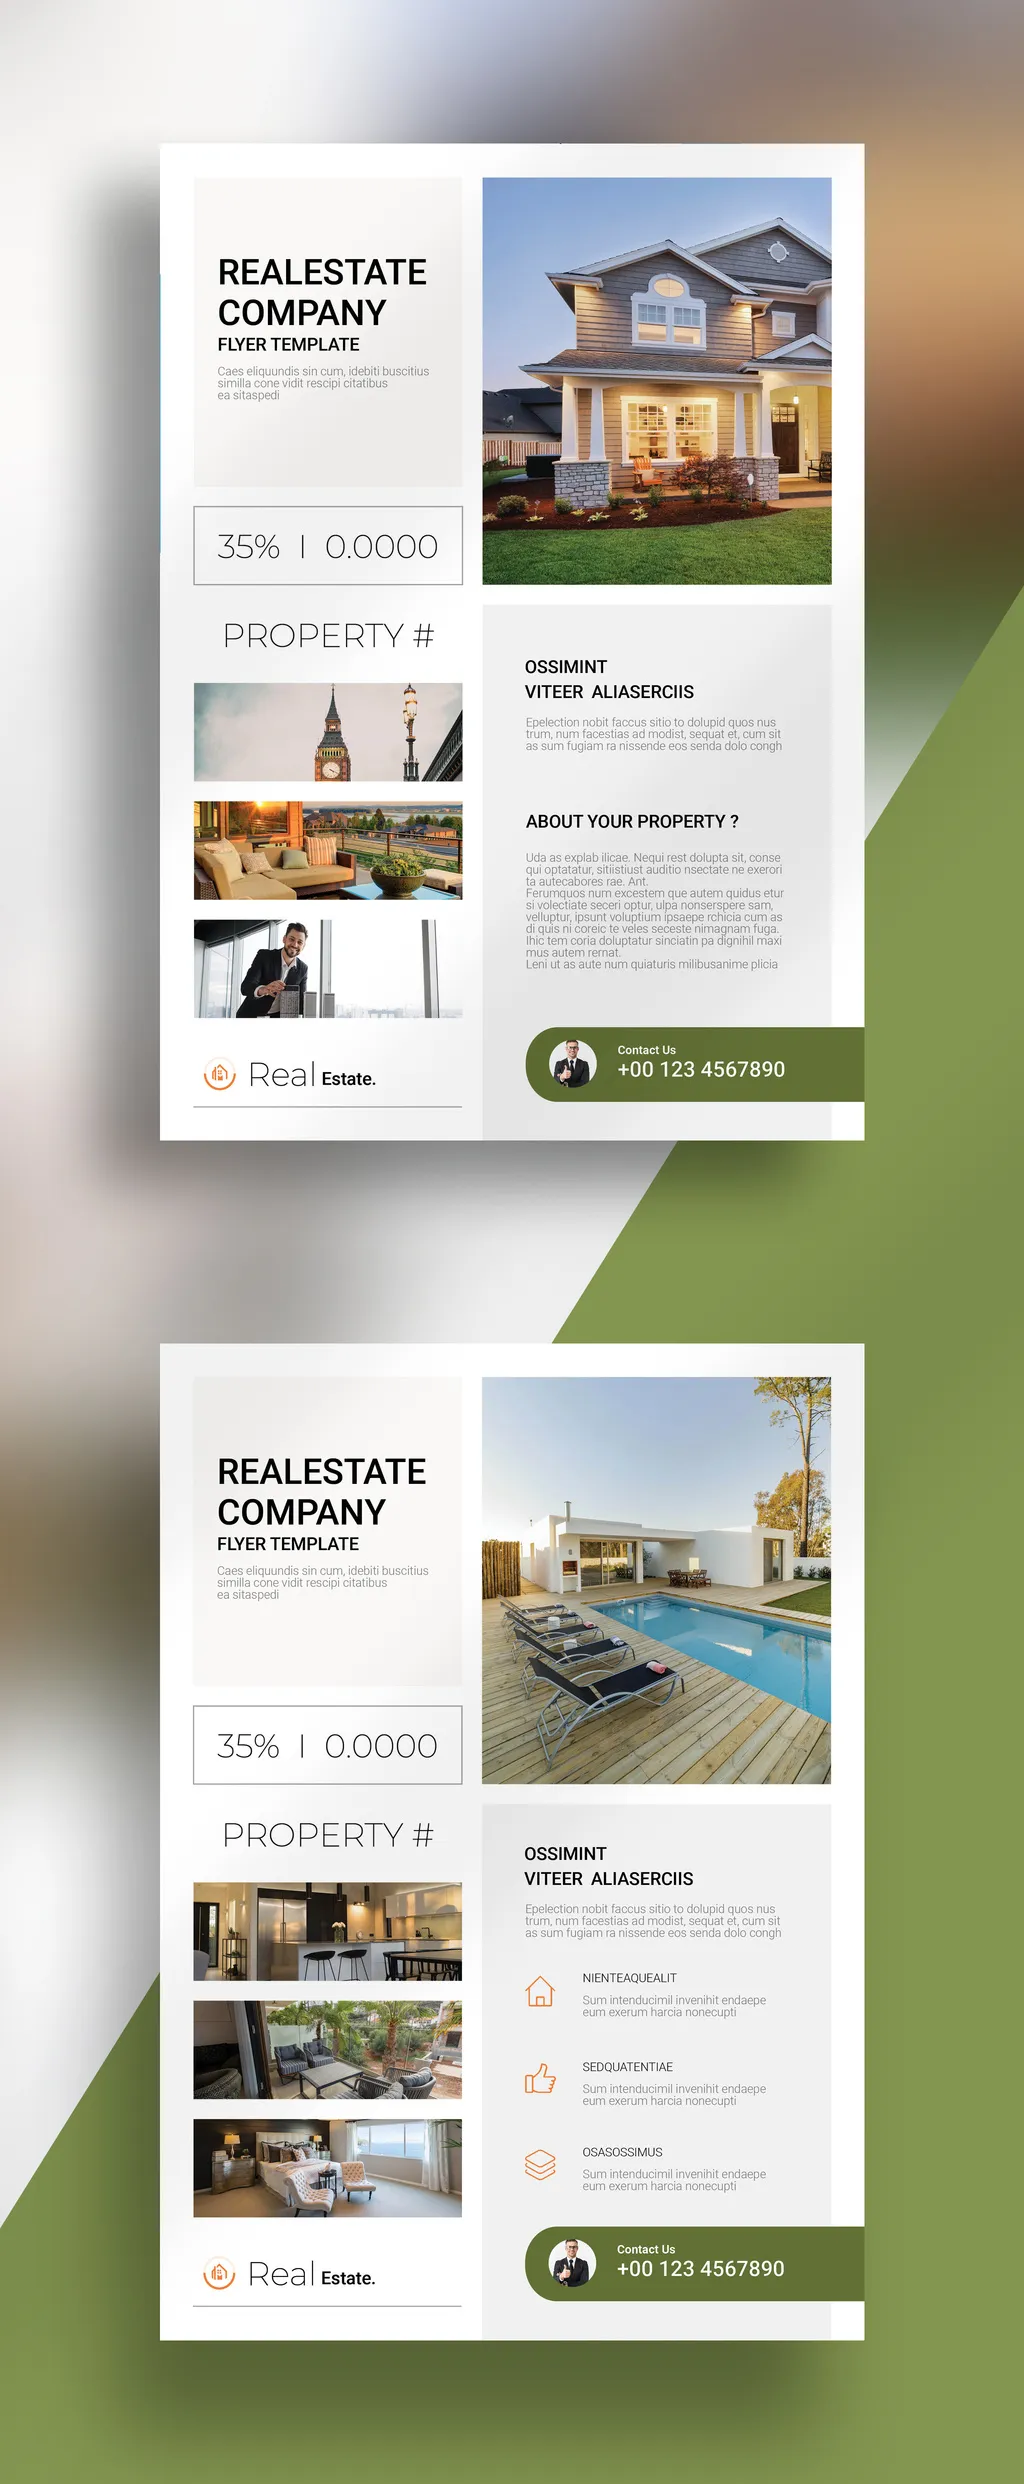 Adobestock - Real Estate Flyer Template 723774618